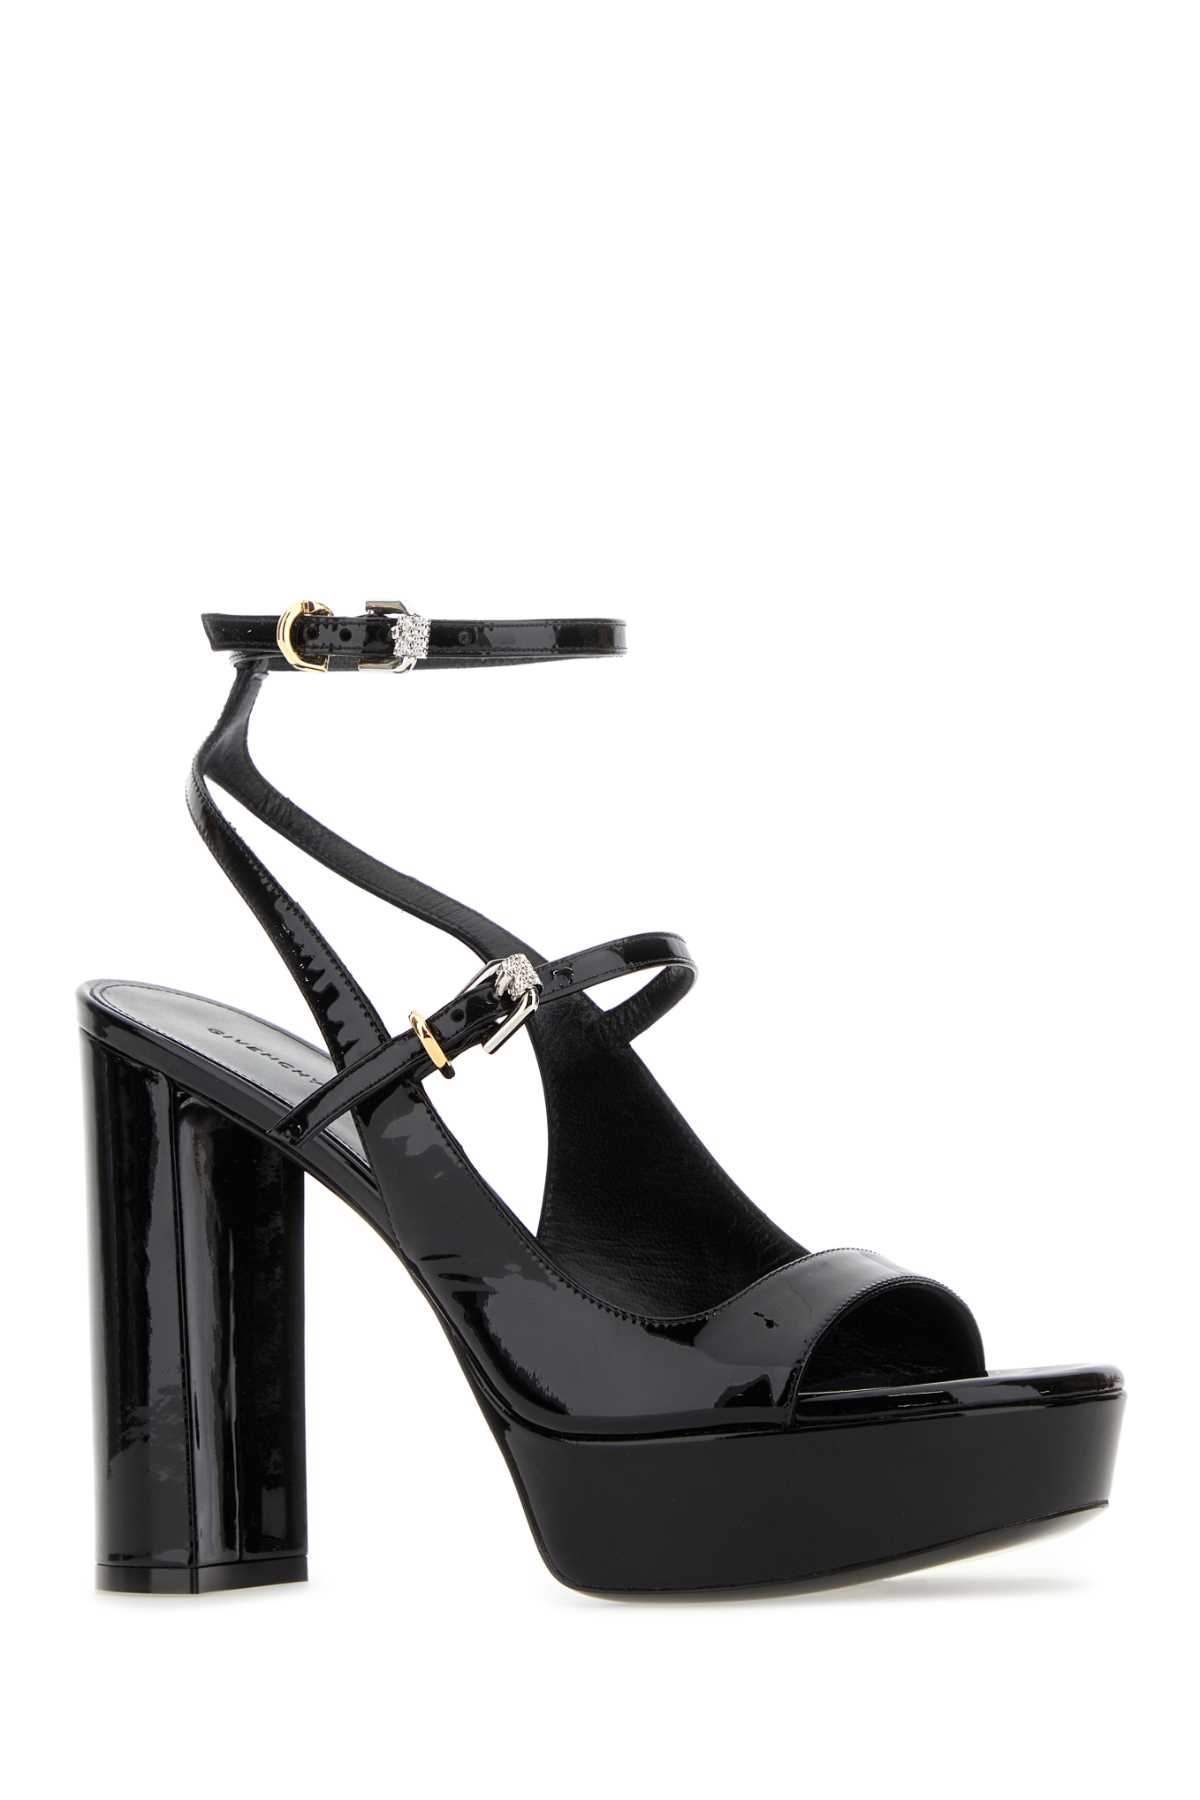 Shop Givenchy Black Leather Voyou Sandals